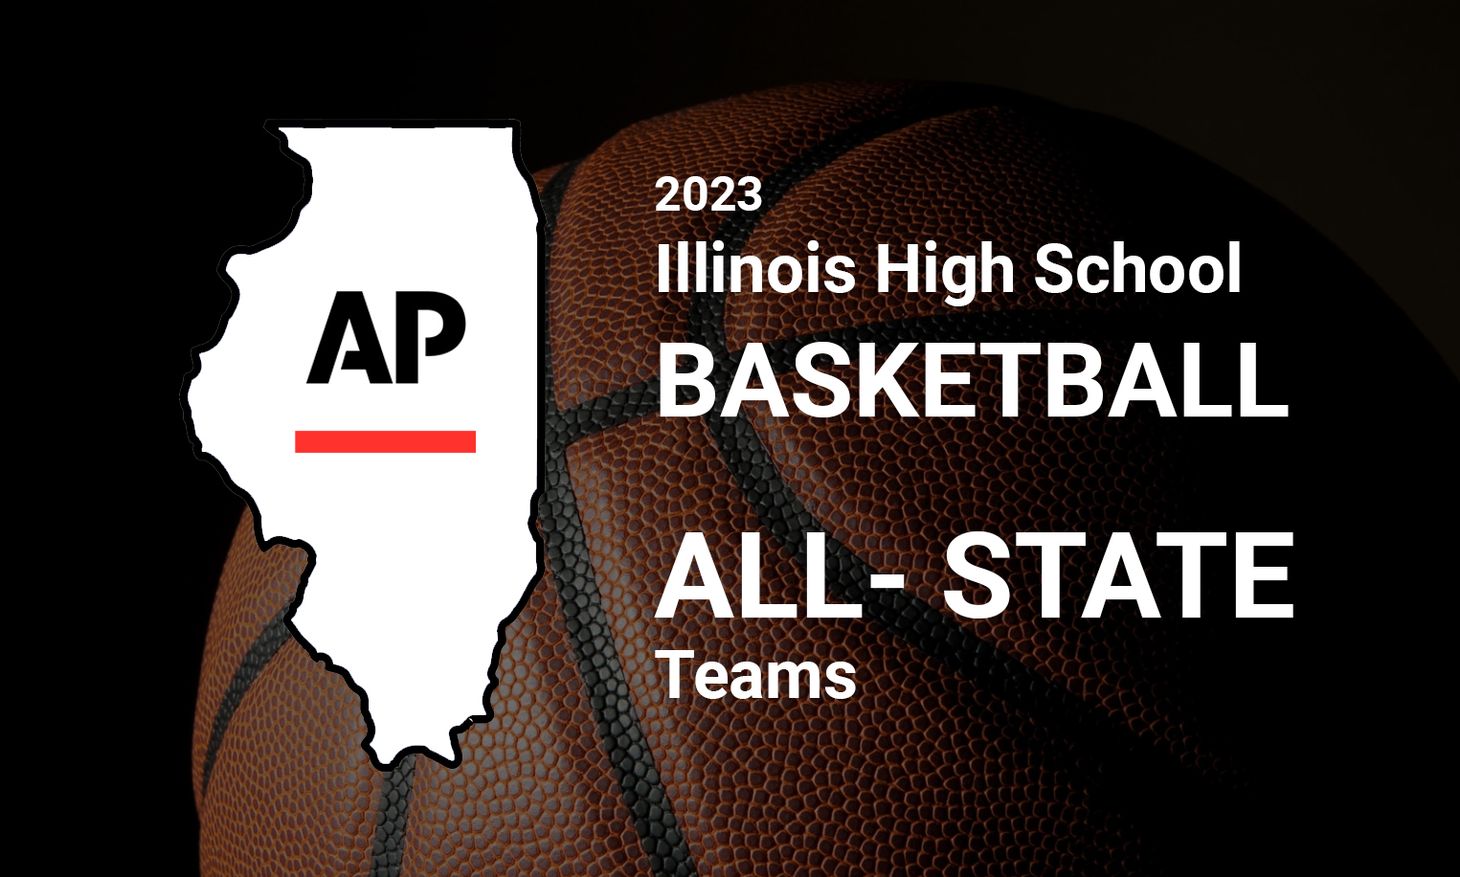 Illinois All-State boys’ basketball teams